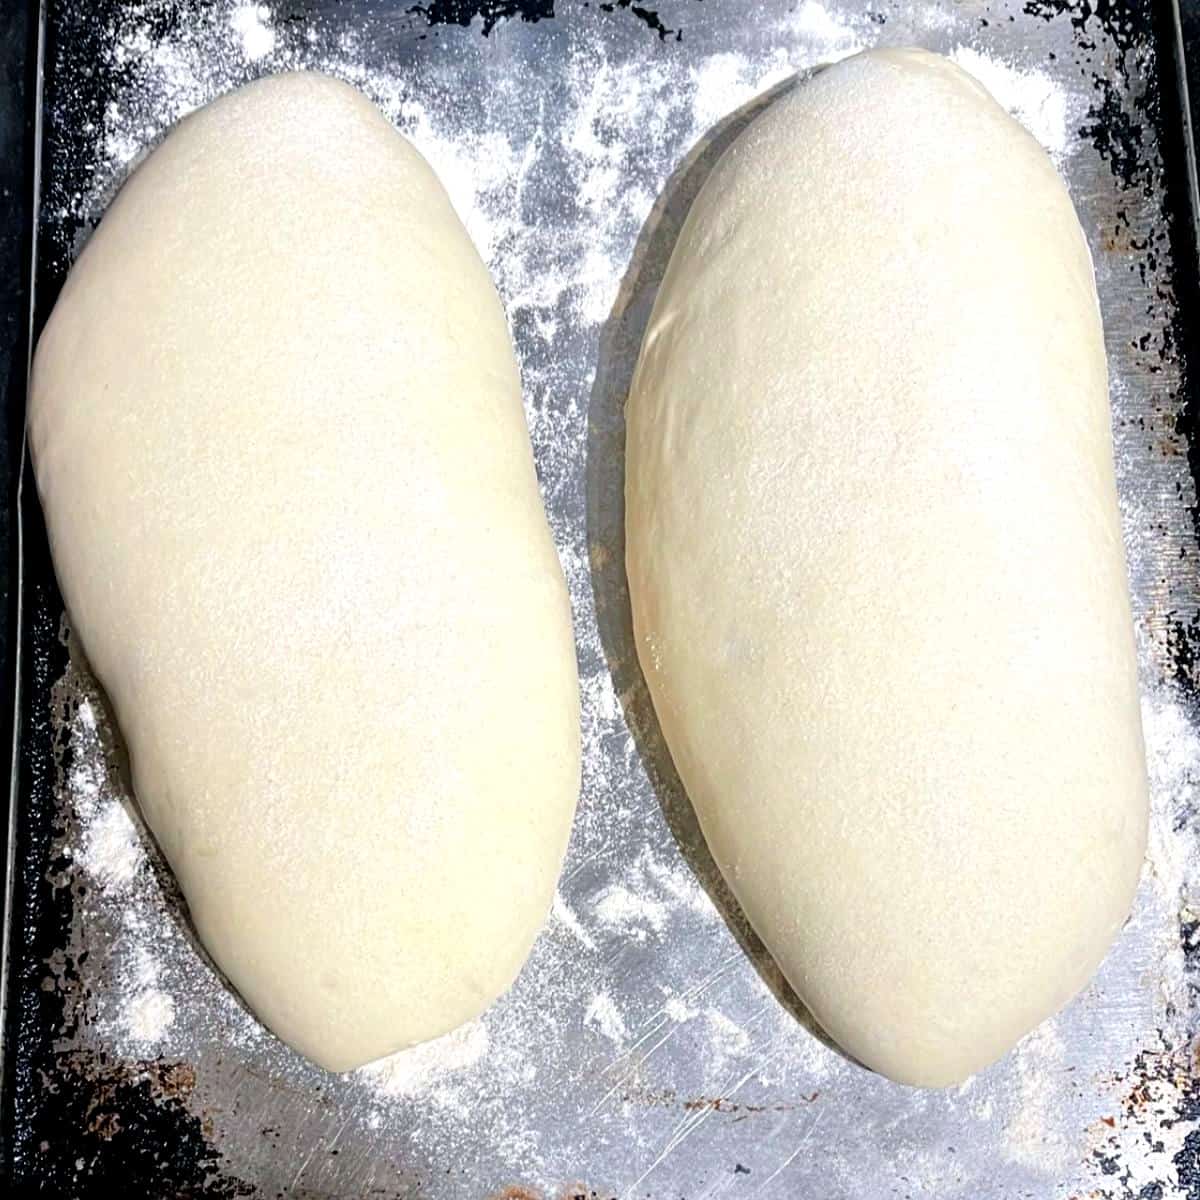 Italian bread loaves before baking.